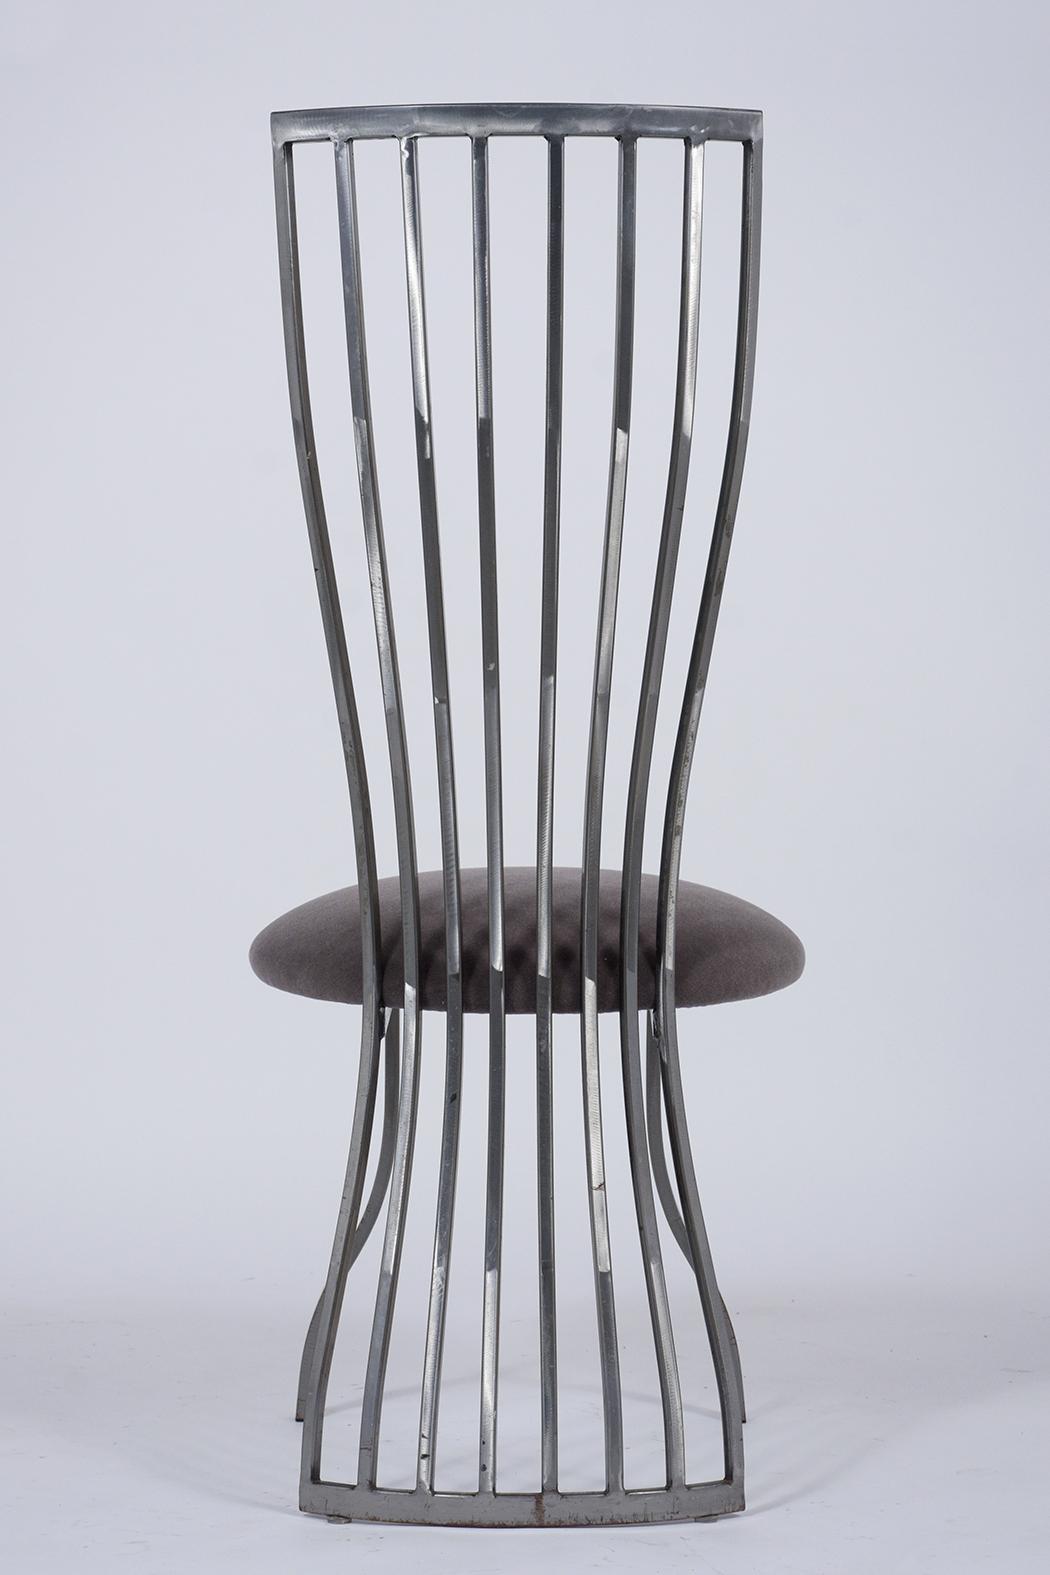 Set of Italian Steel Dining Chairs